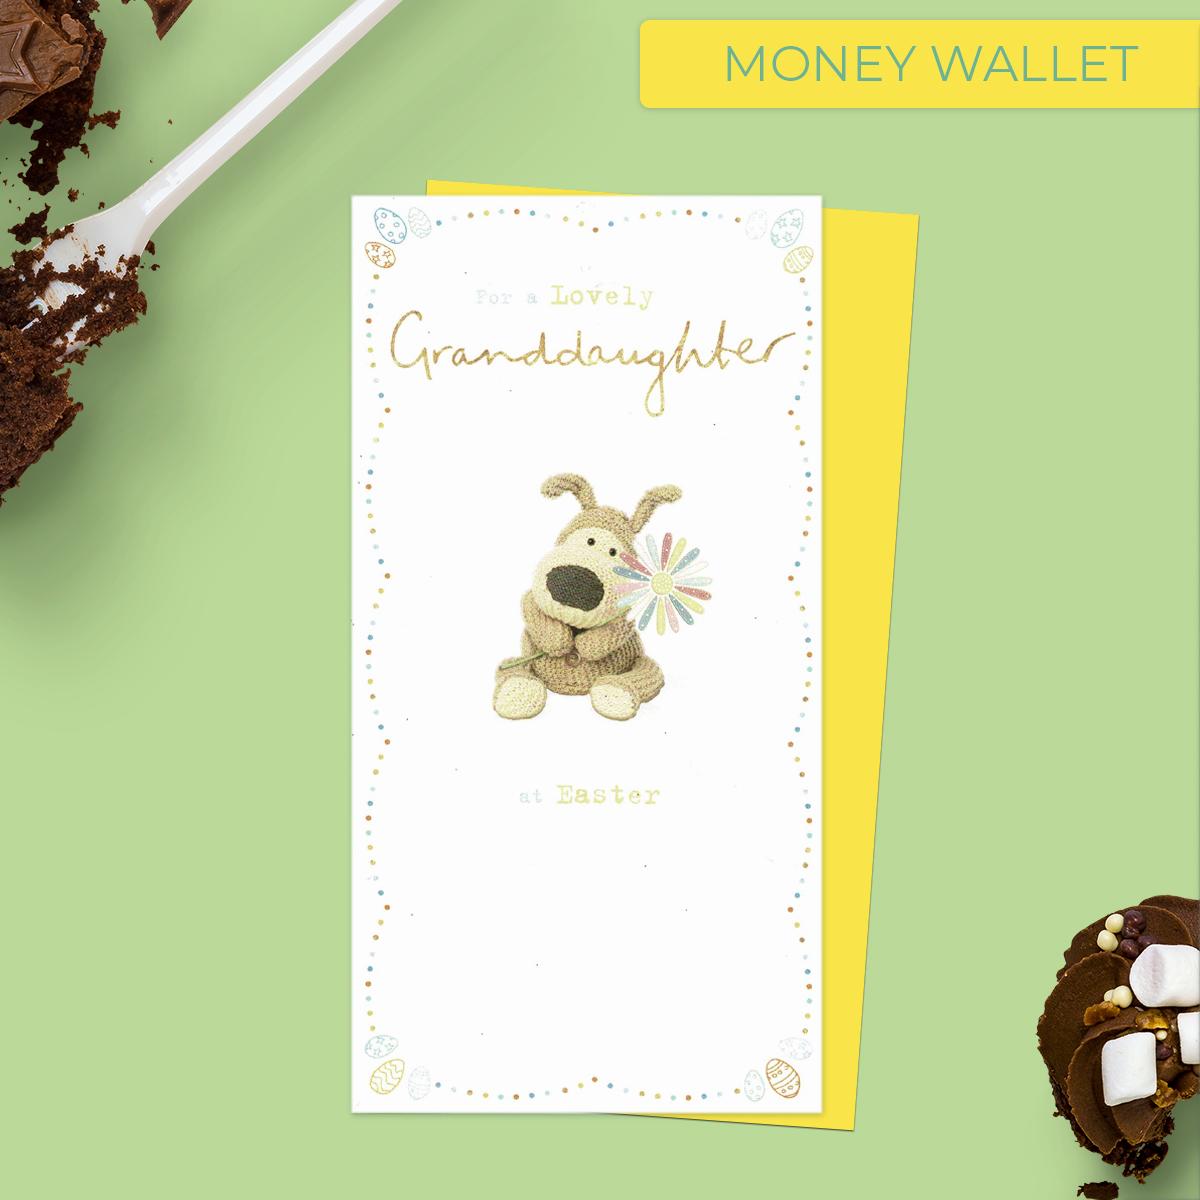 Granddaughter Boofle Bear Money Wallet Alongside Its Yellow Envelope